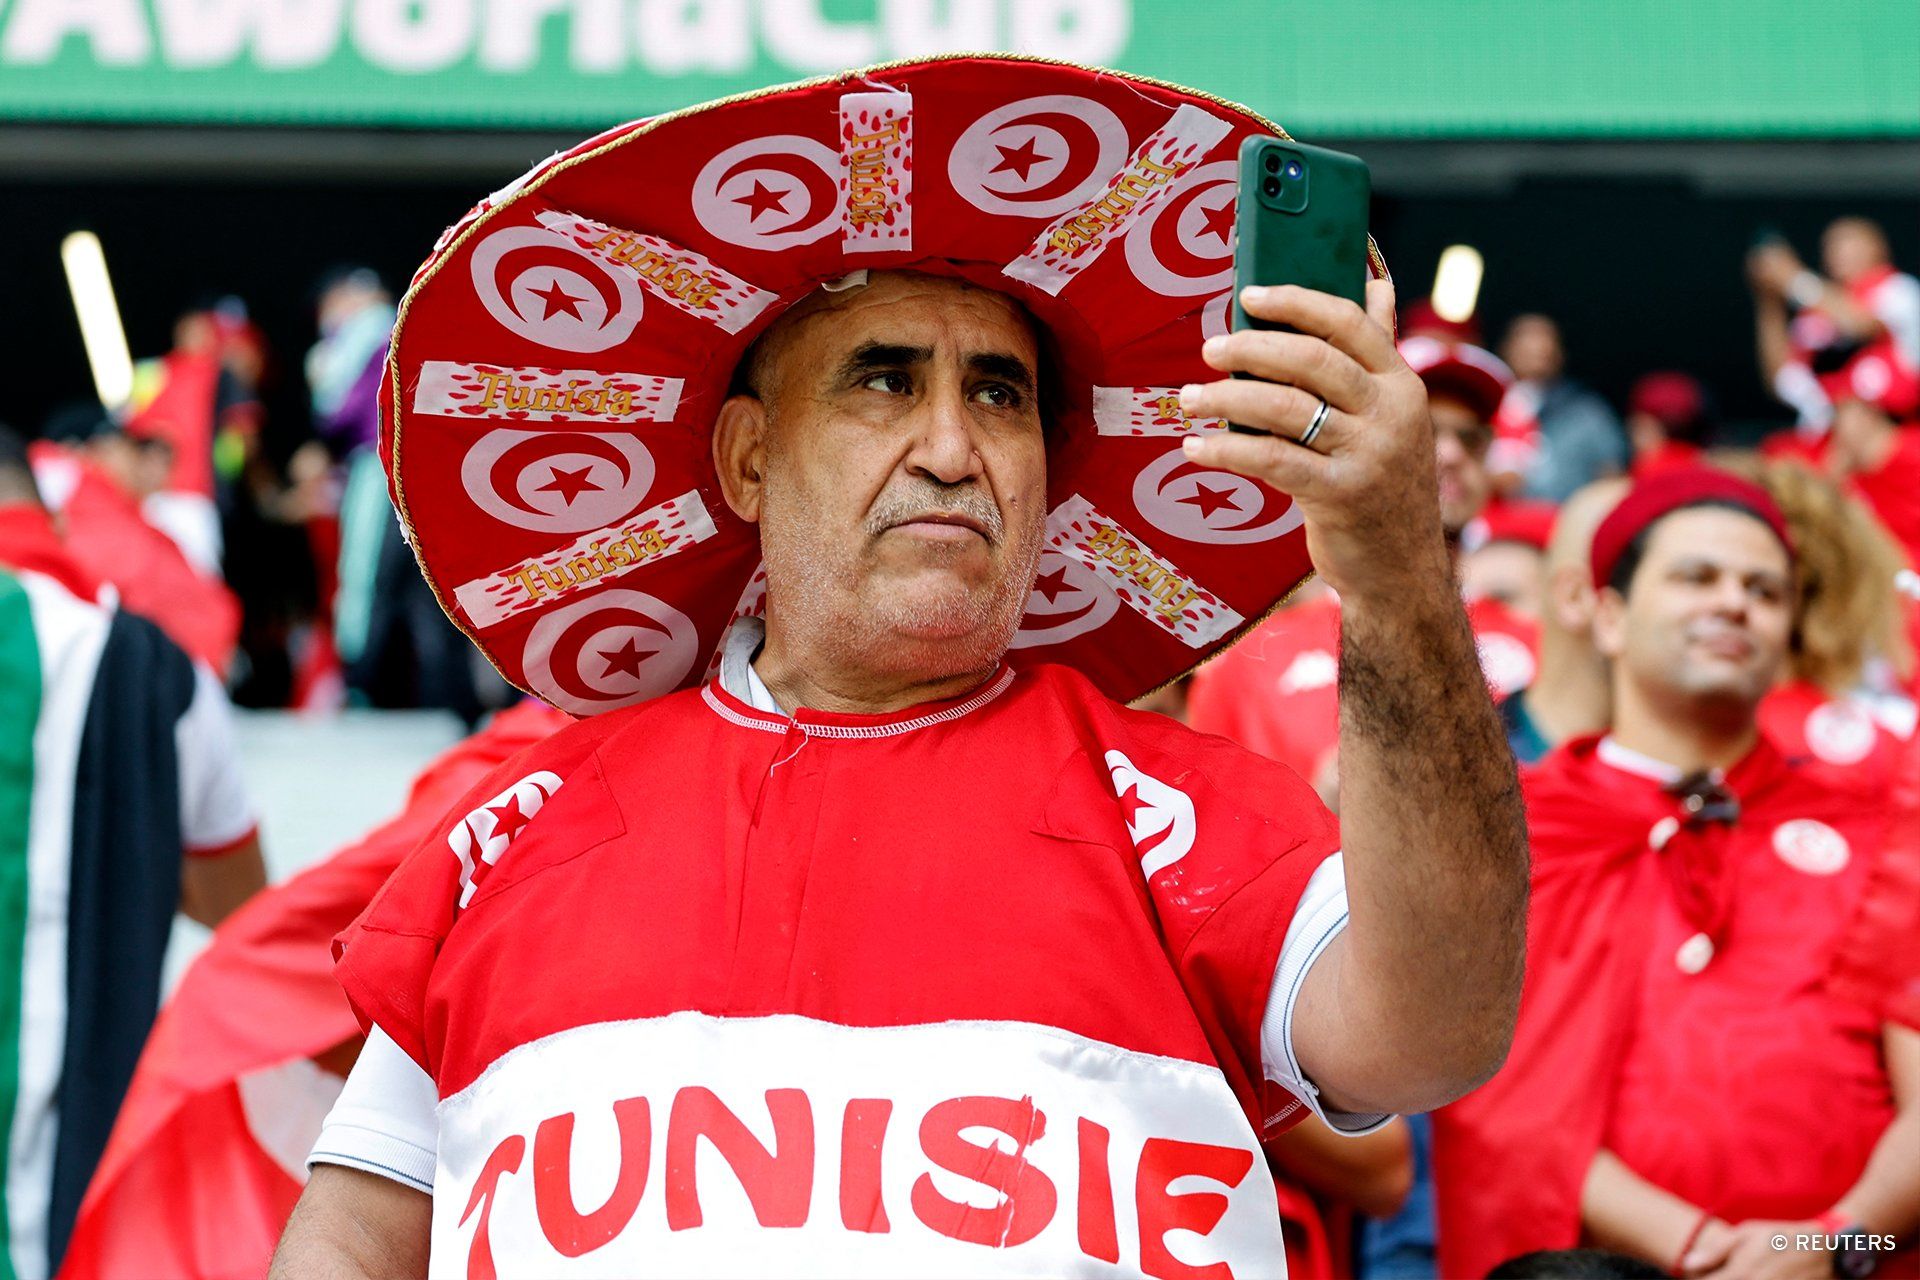 The Tunisia fans